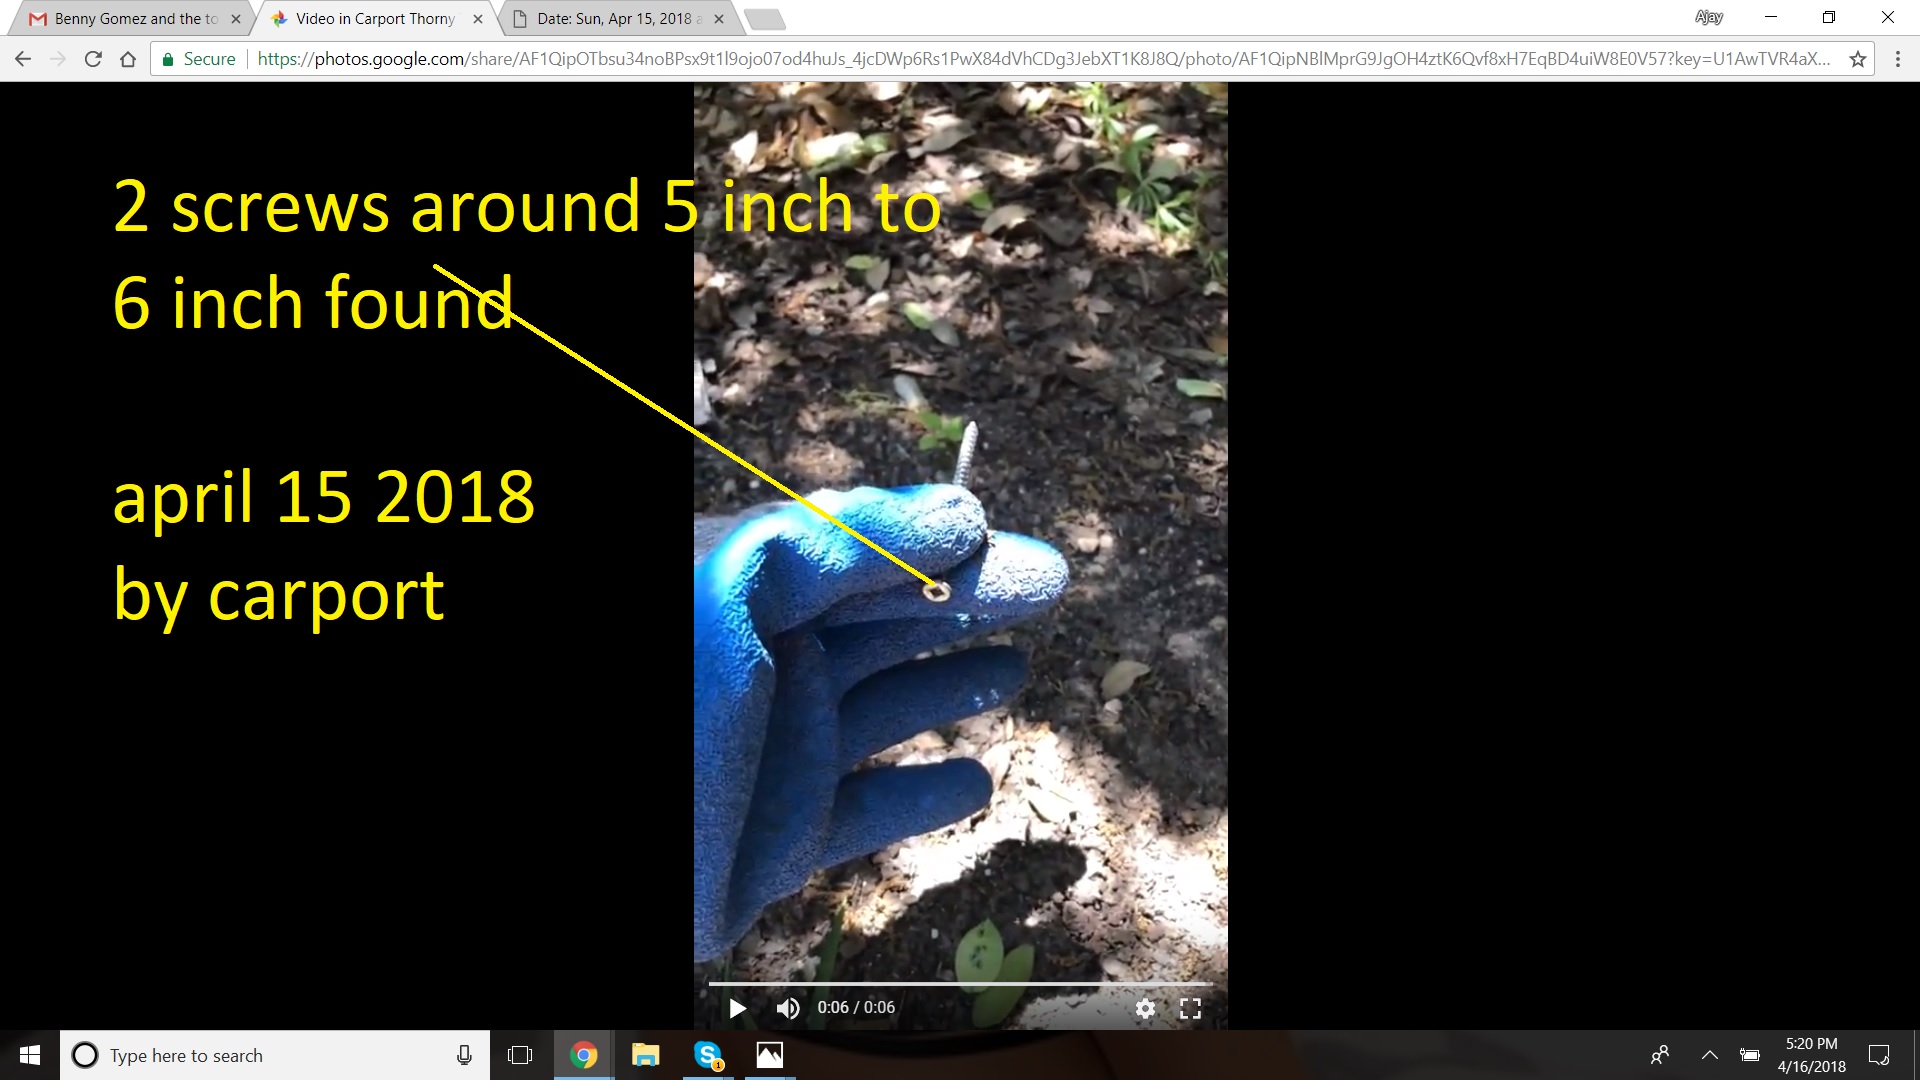 2 screws around 5 to 6 inch found april 15 2018 by the carport